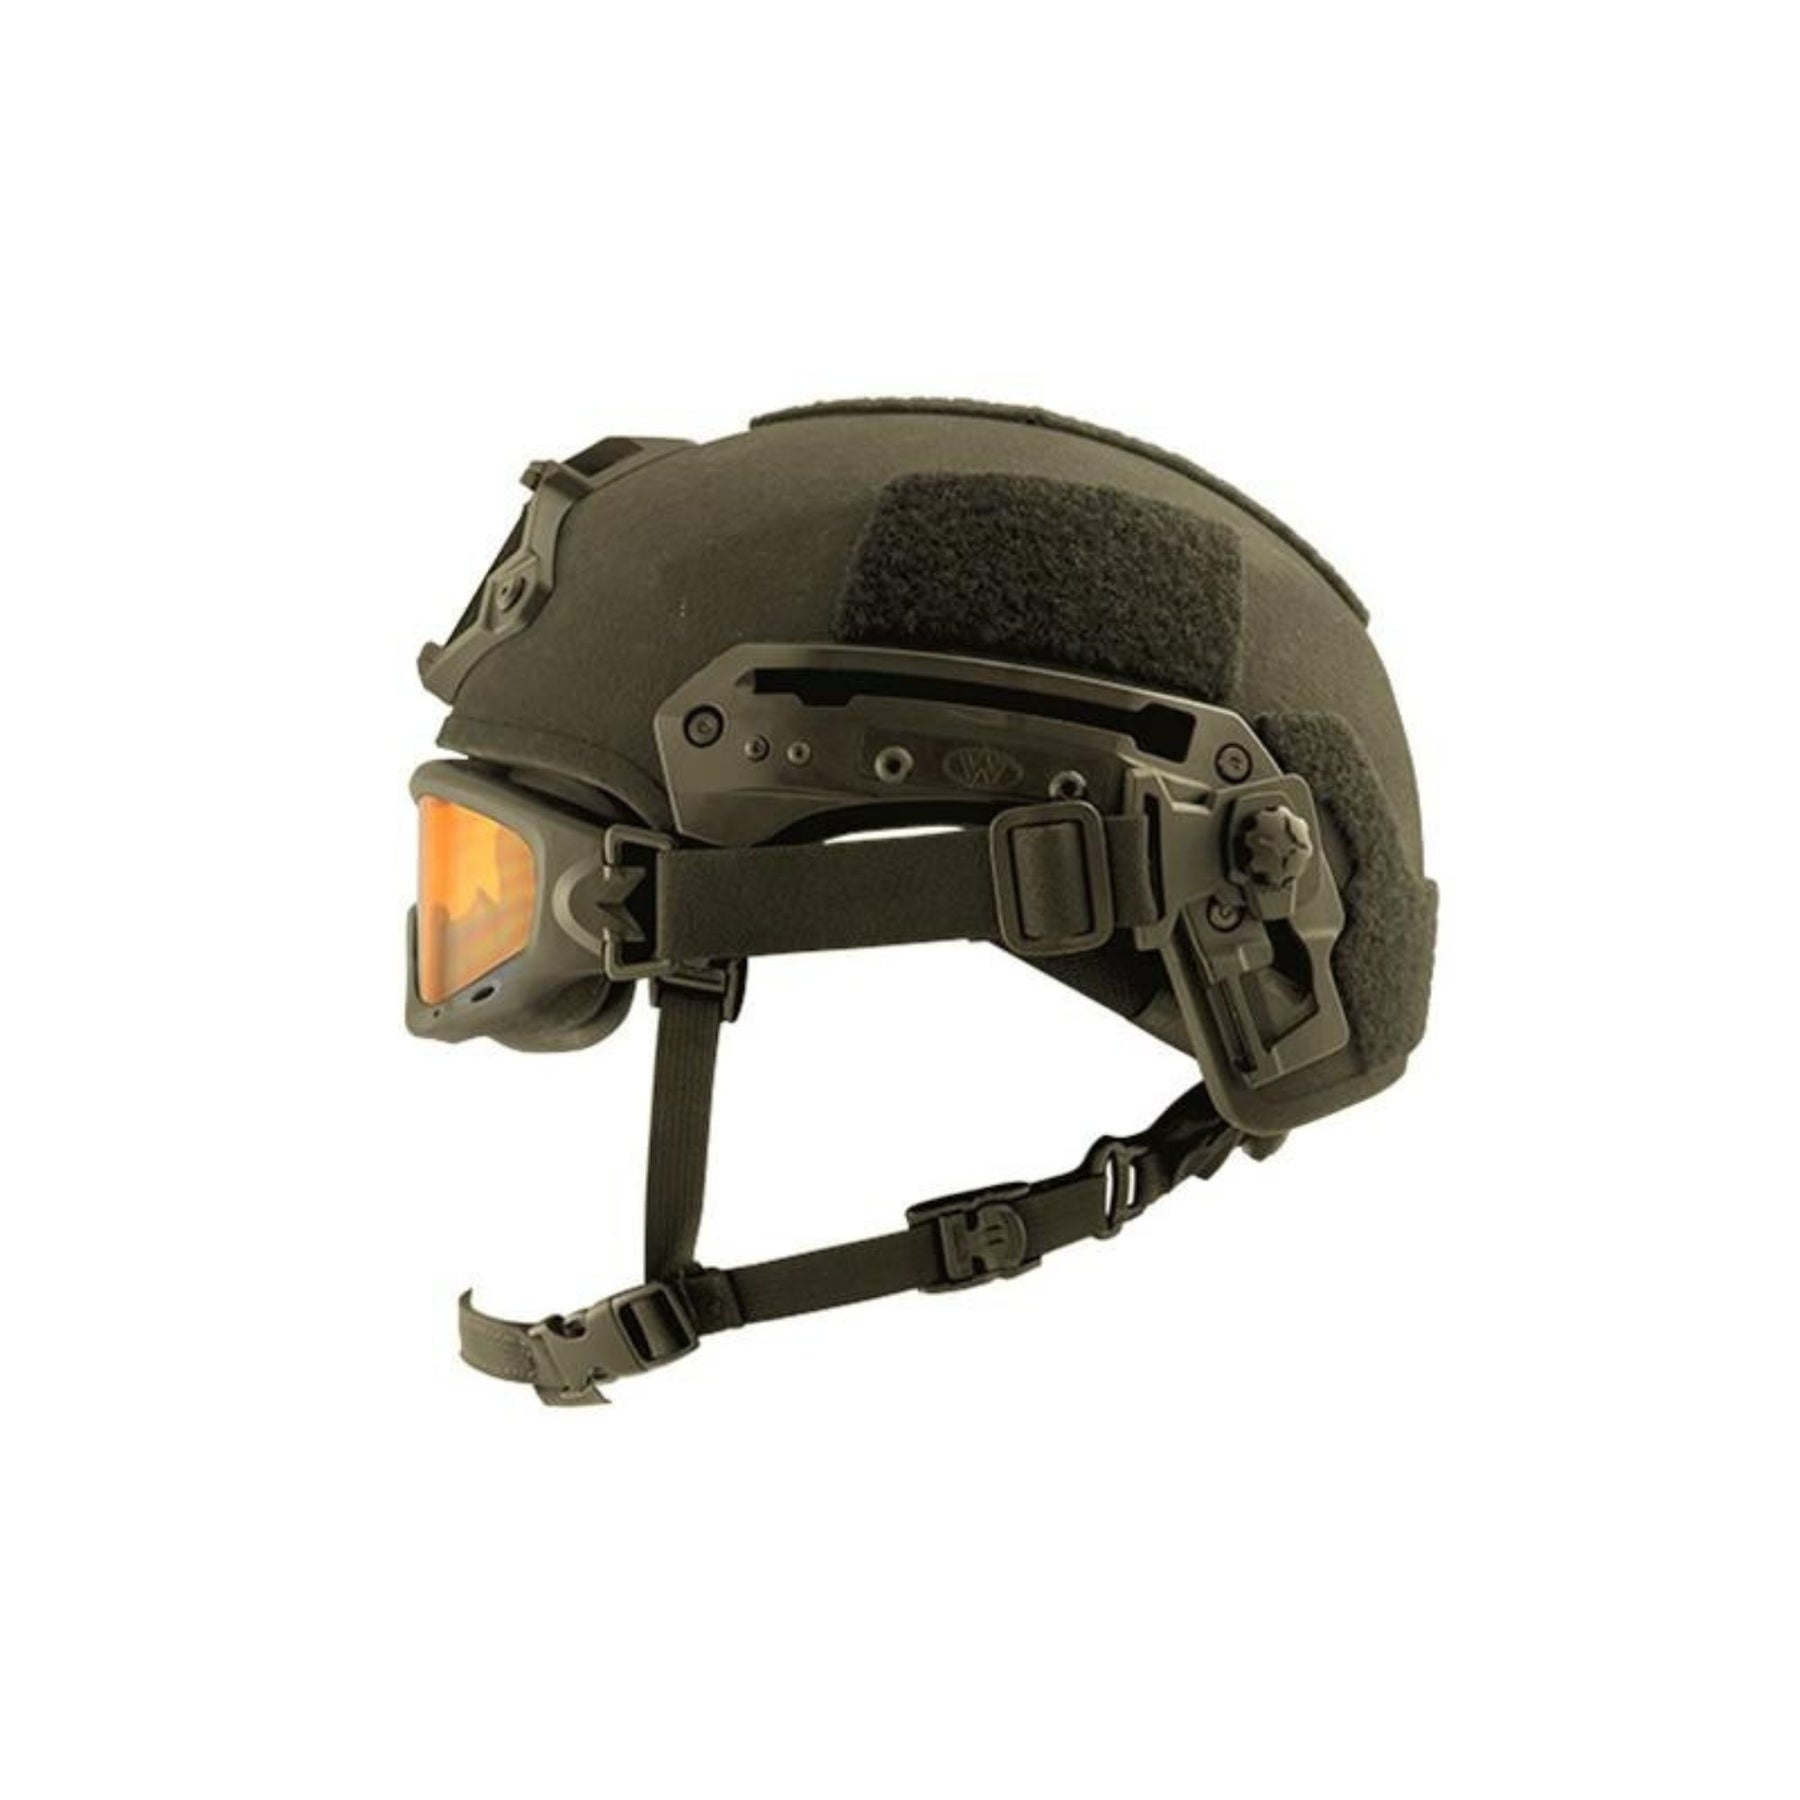 WILEYX | SPEAR - NERVE TEAM WENDY EXFIL HELMET RAS Tan - Adattatore per casco  EXFIL compatibile